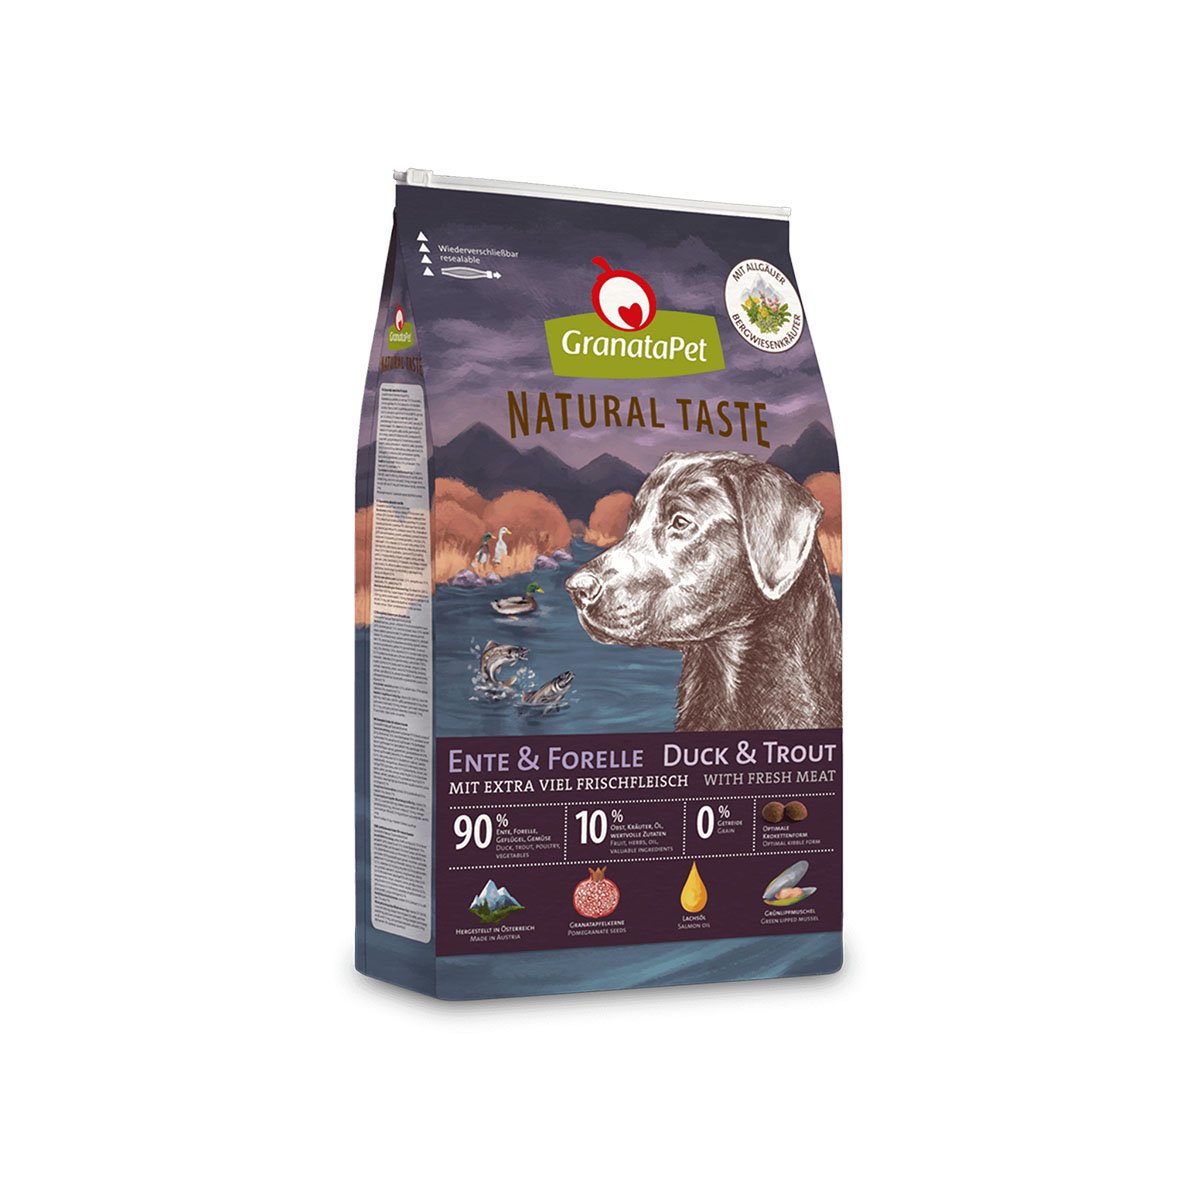 GranataPet Natural Taste Ente & Forelle 4kg von Granatapet